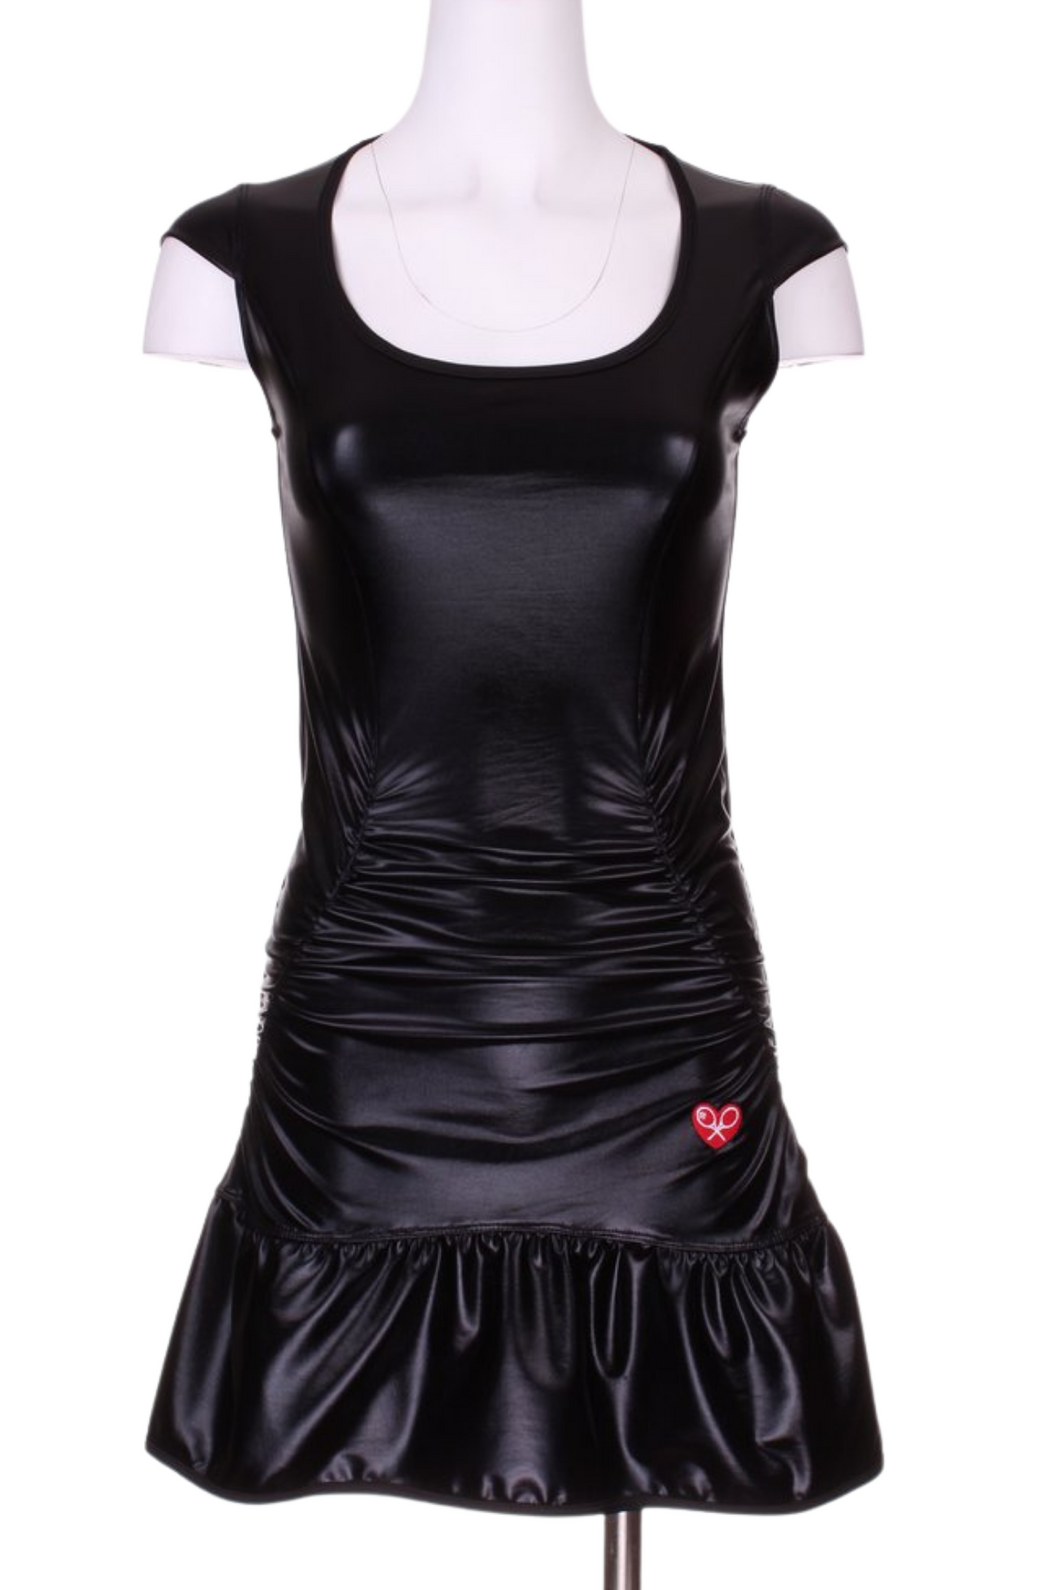 Black Pleather Monroe Tennis Dress - I LOVE MY DOUBLES PARTNER!!!